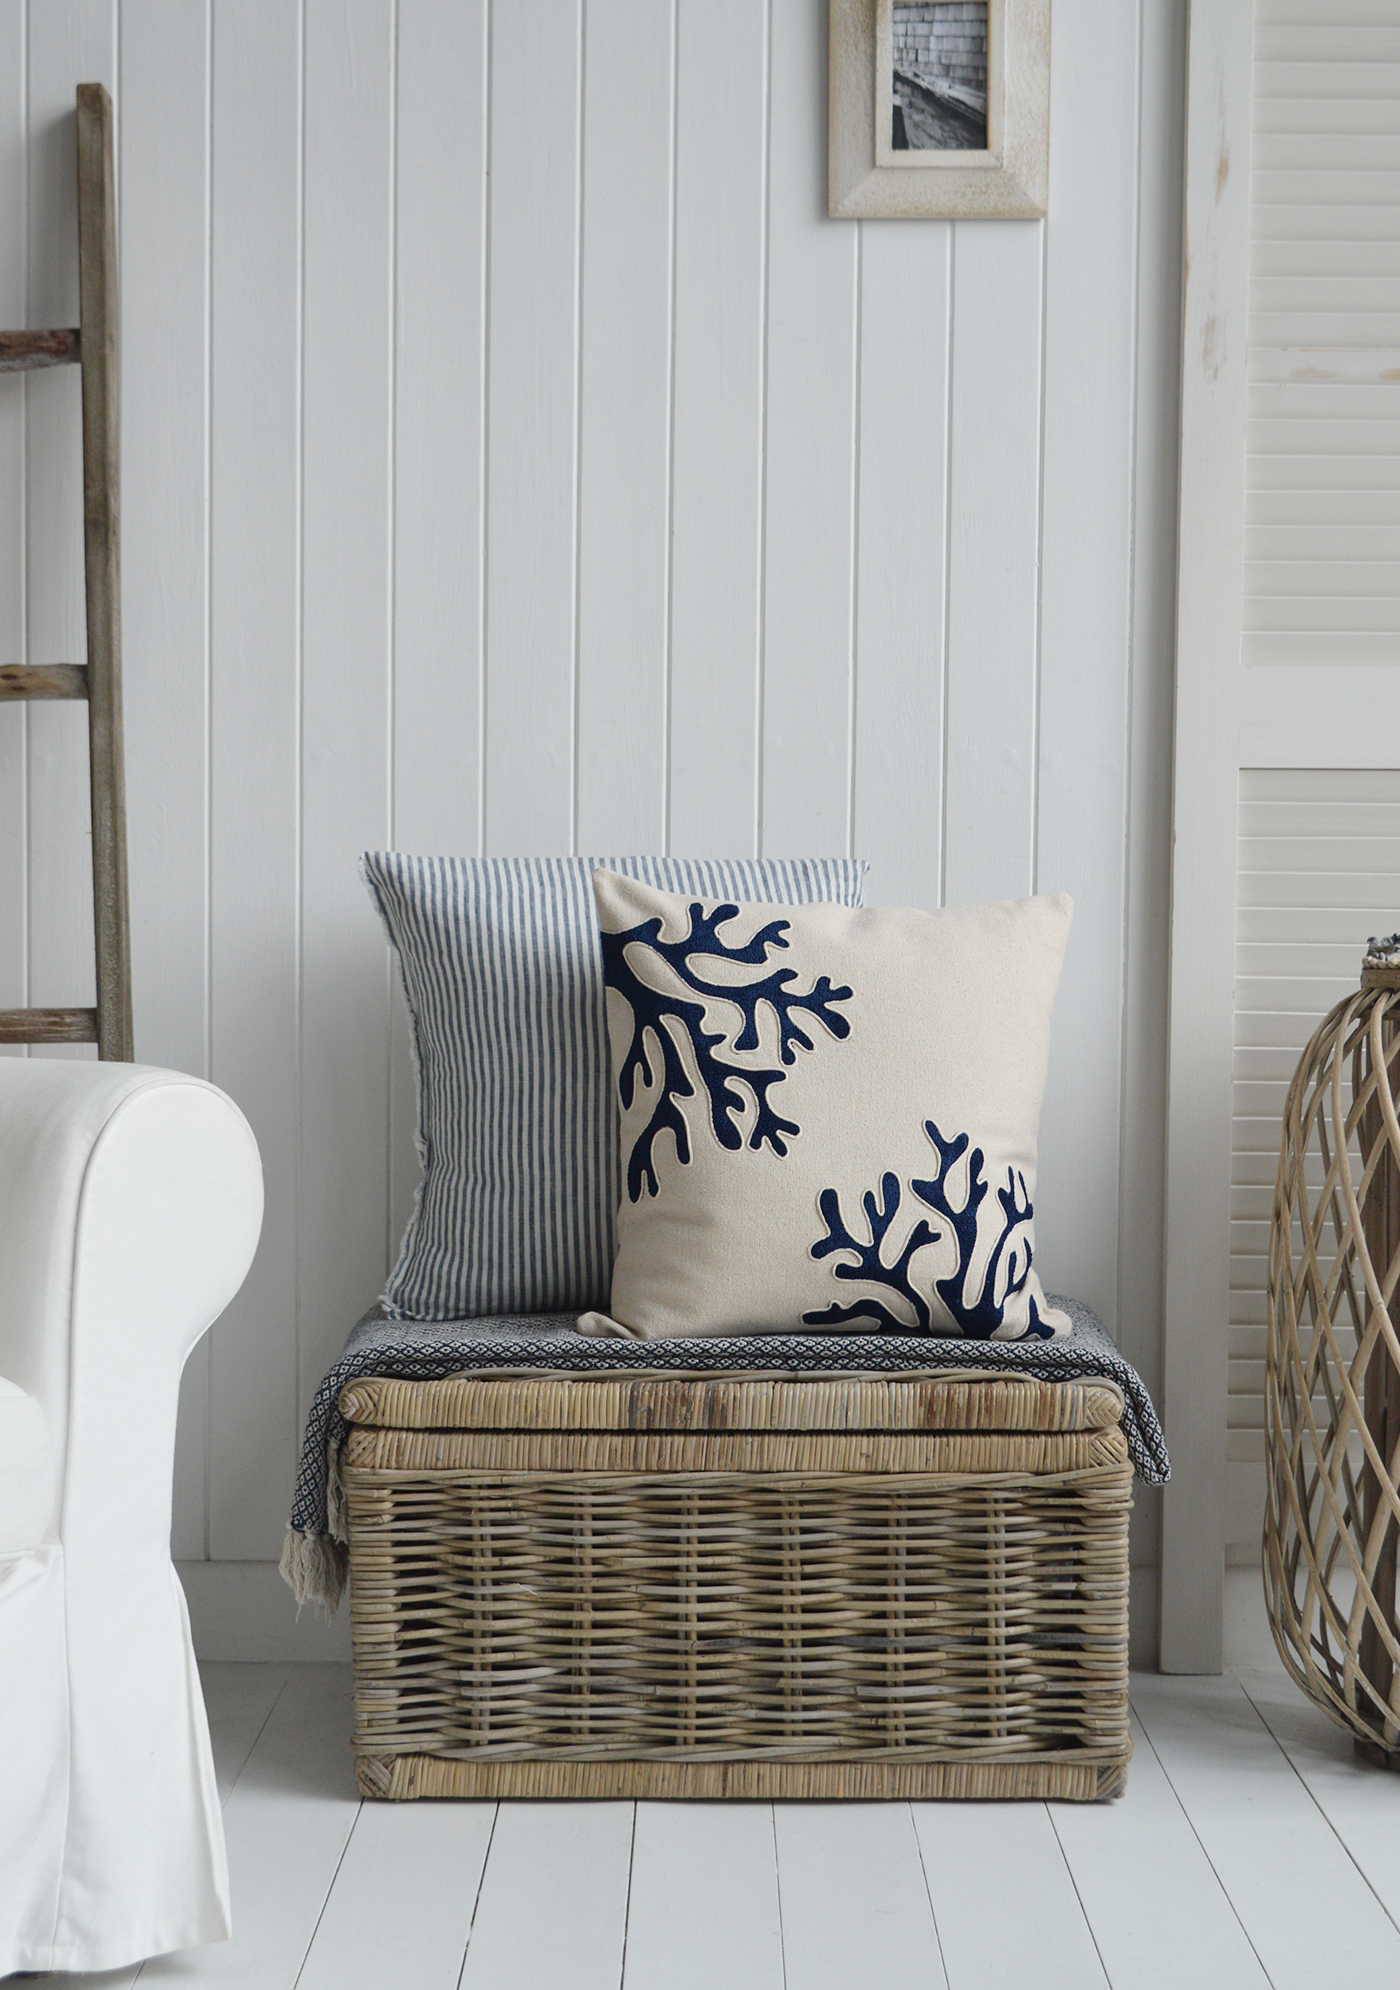 Nantucket coral coastal cushion cover for New England  Hamptons and coastal furniture and interiors